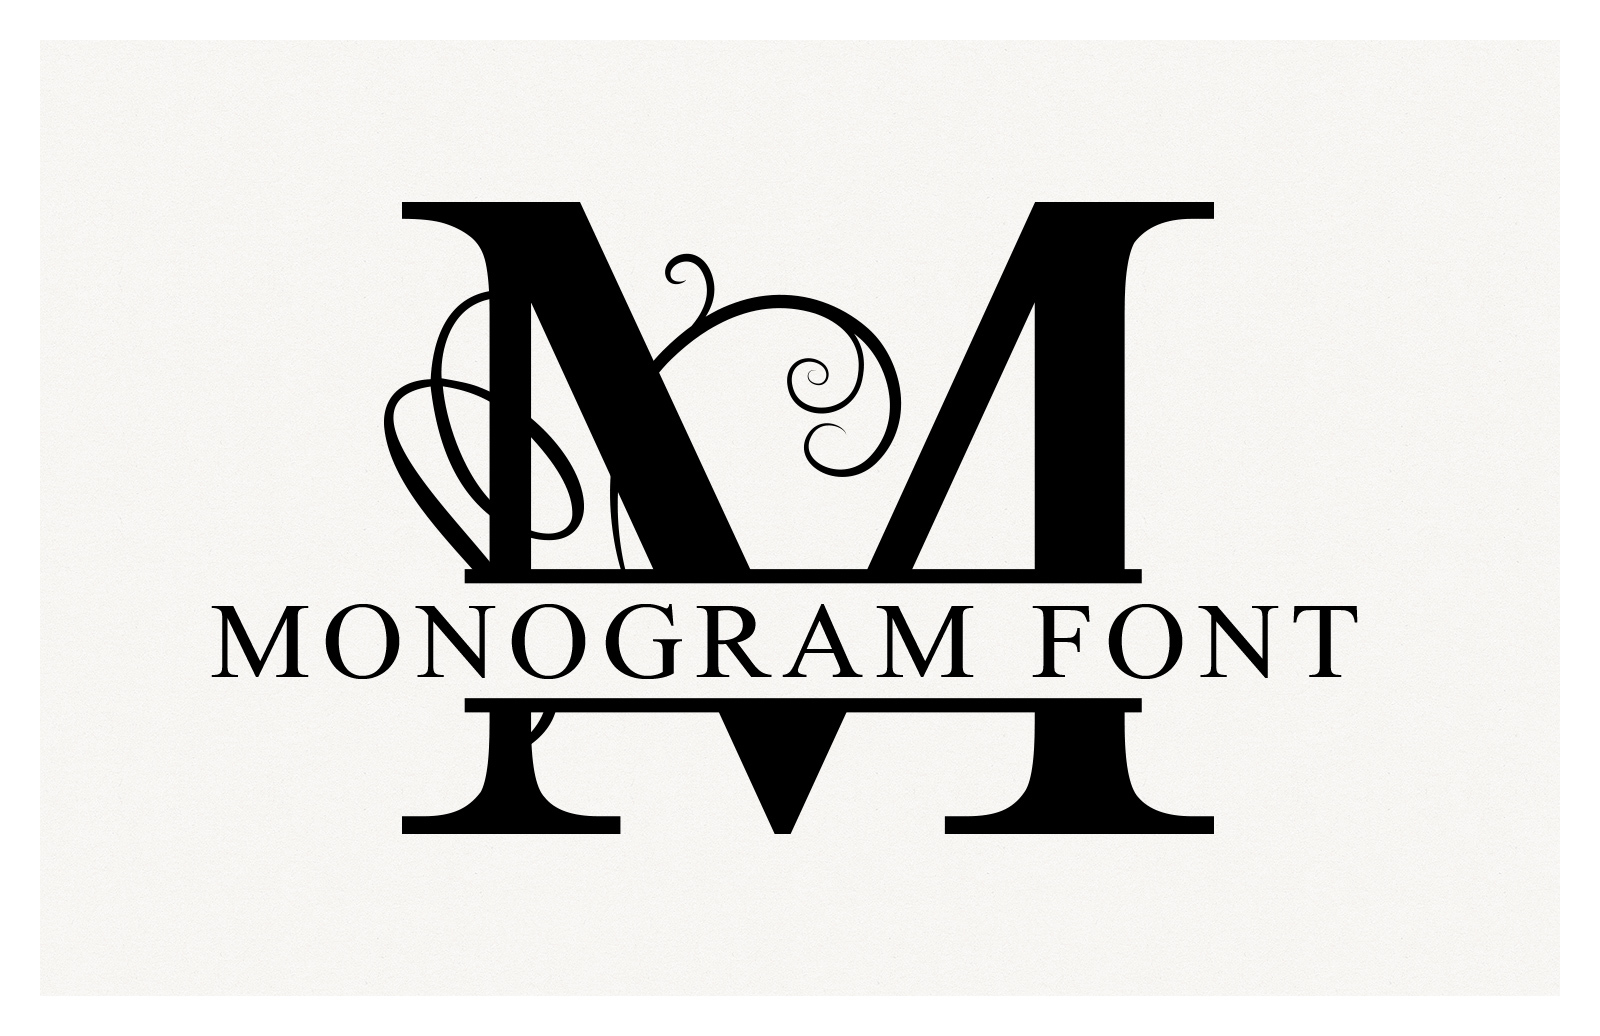 Split Monogram Font & Vectors — Medialoot